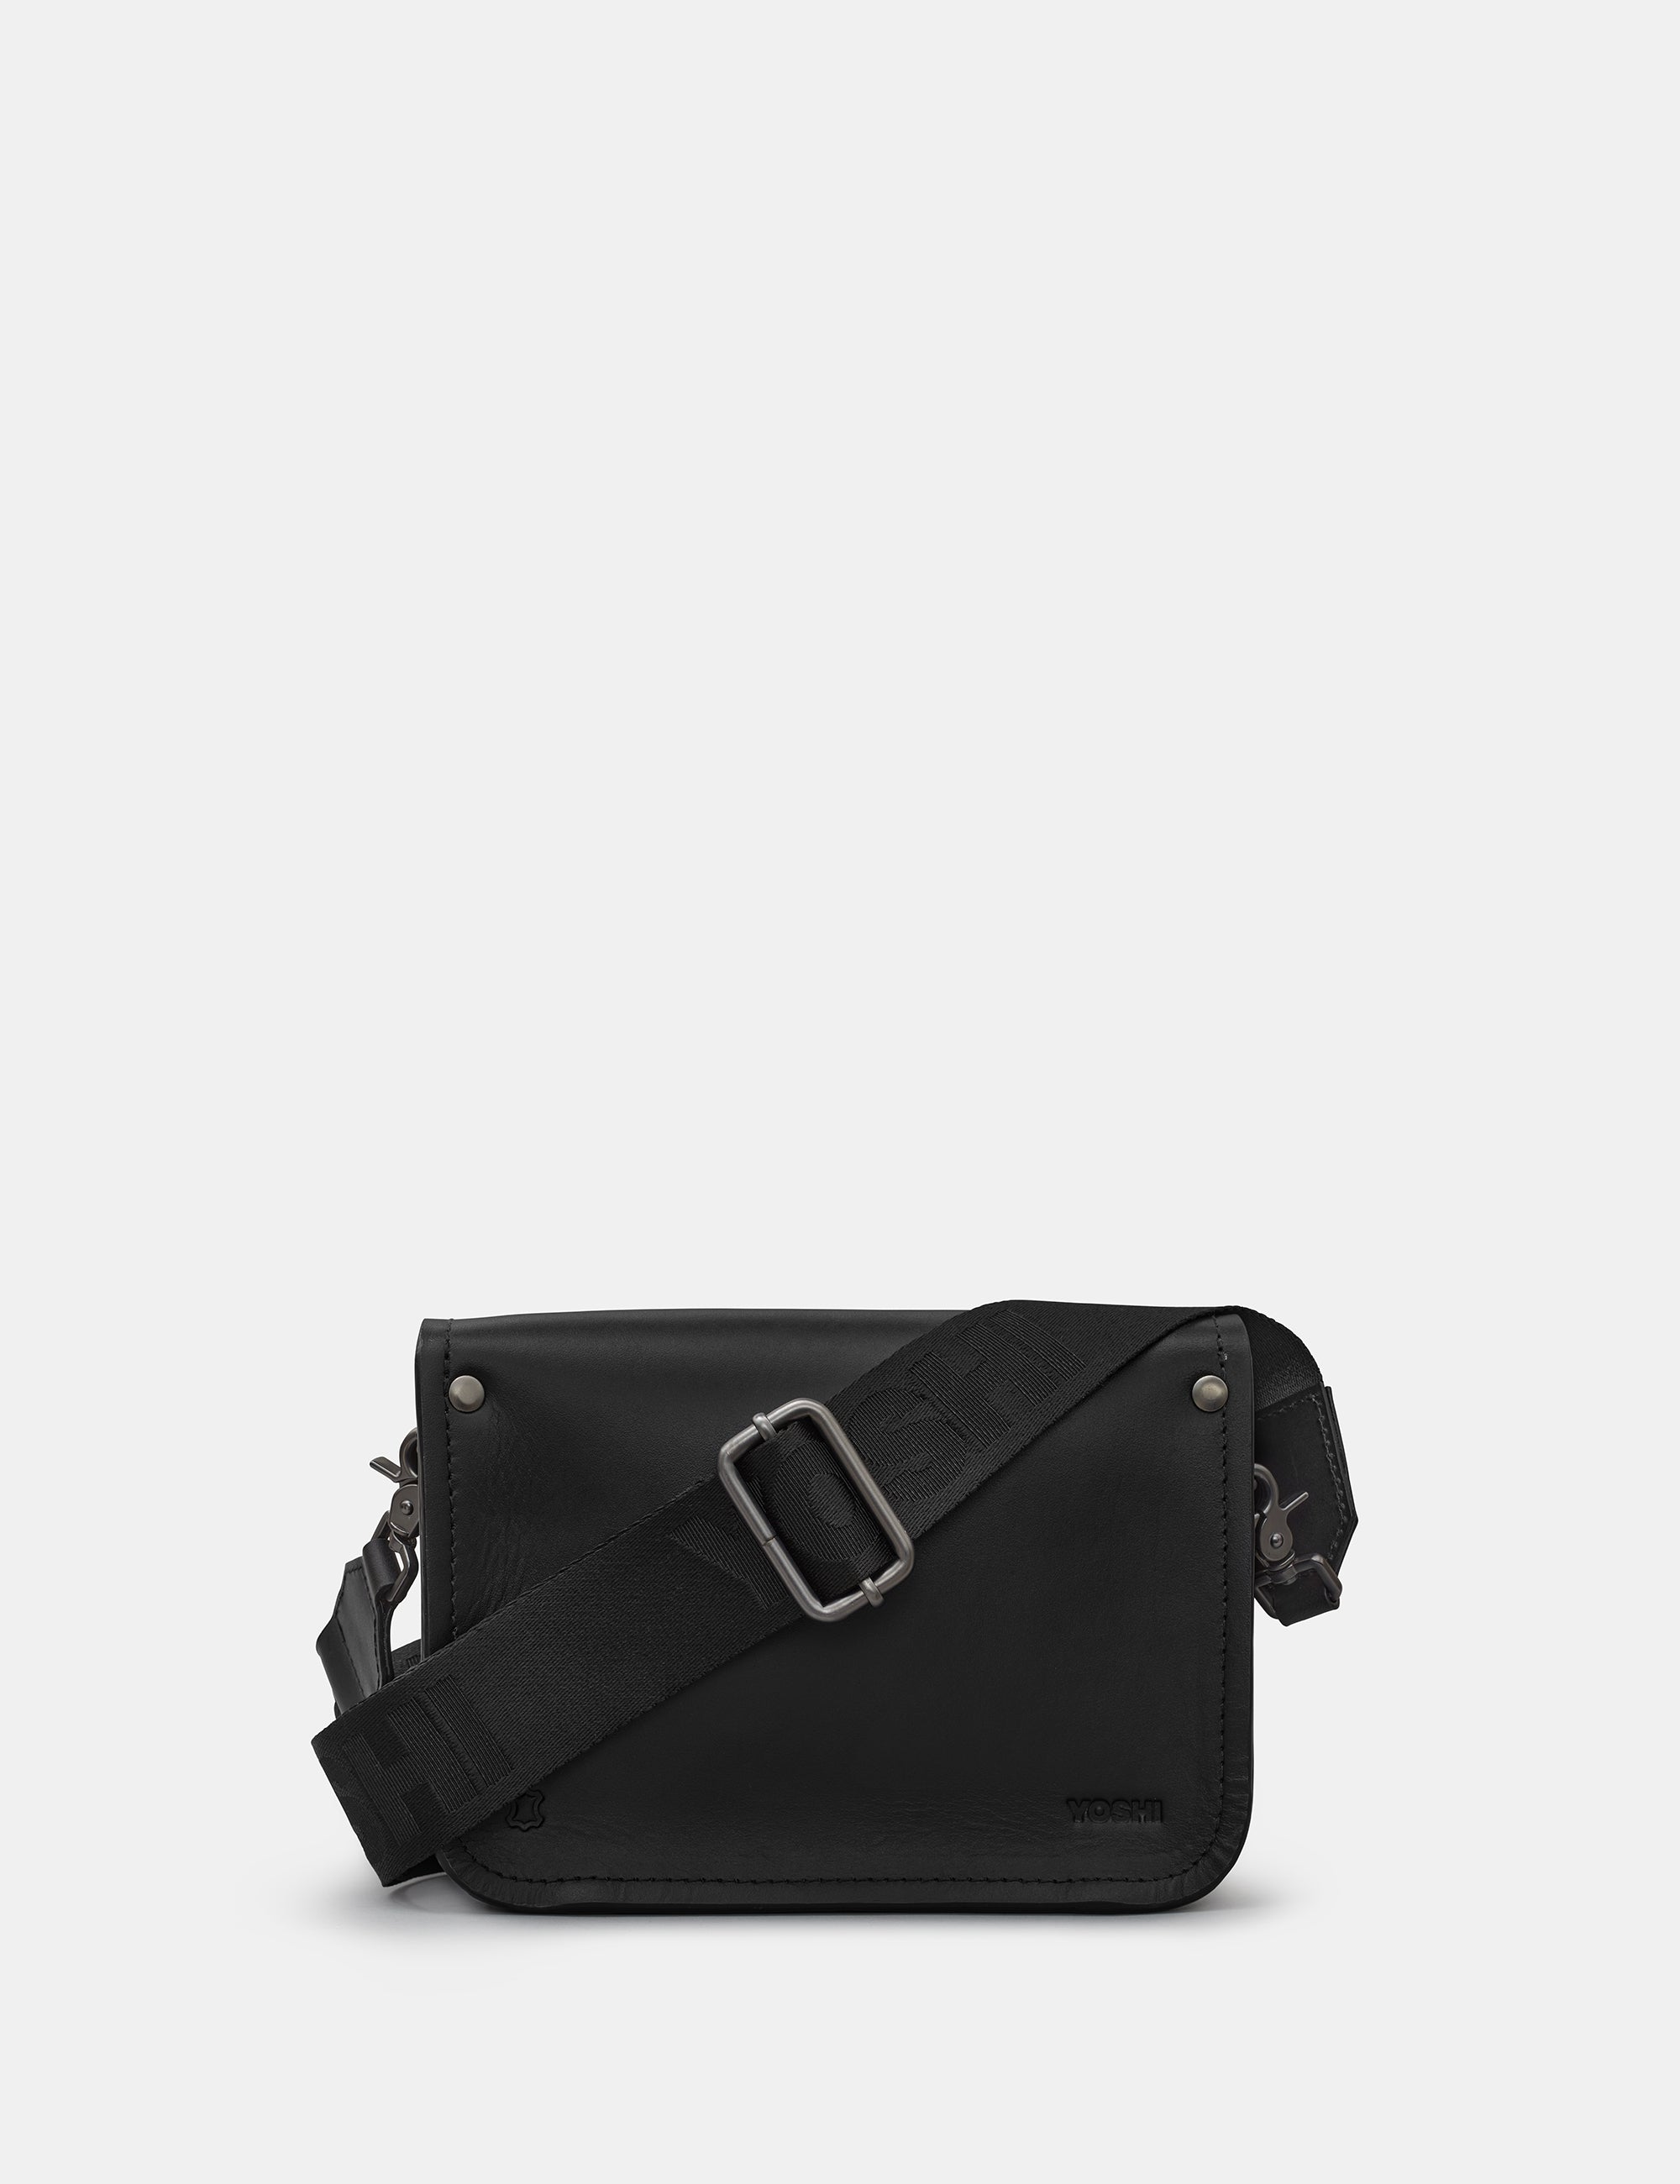 Tilney Black Leather Mini Satchel | Cross Body Bag | Handbag by Yoshi ...